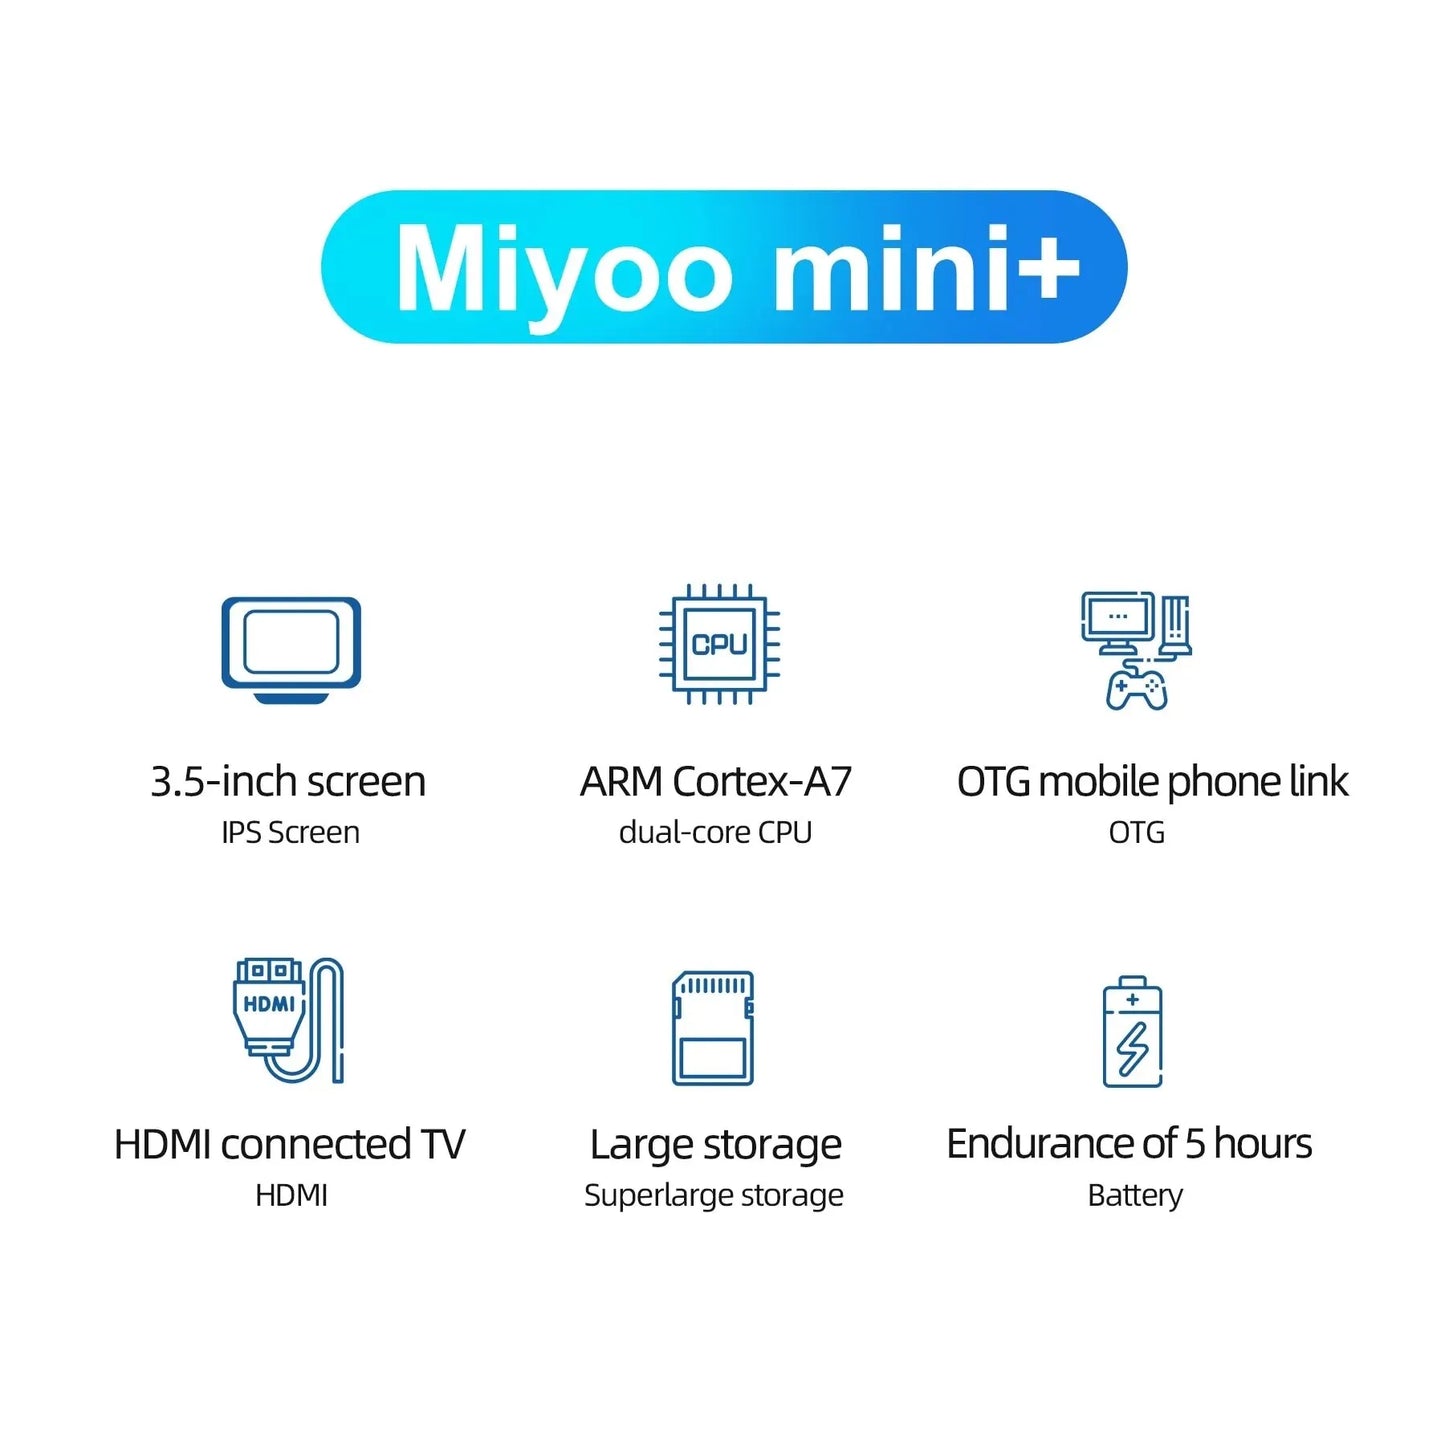 MIYOO Mini Plus Portable Retro Handheld Game Console V2 Mini IPS Screen Classic Video Game Console Linux System Children Gift